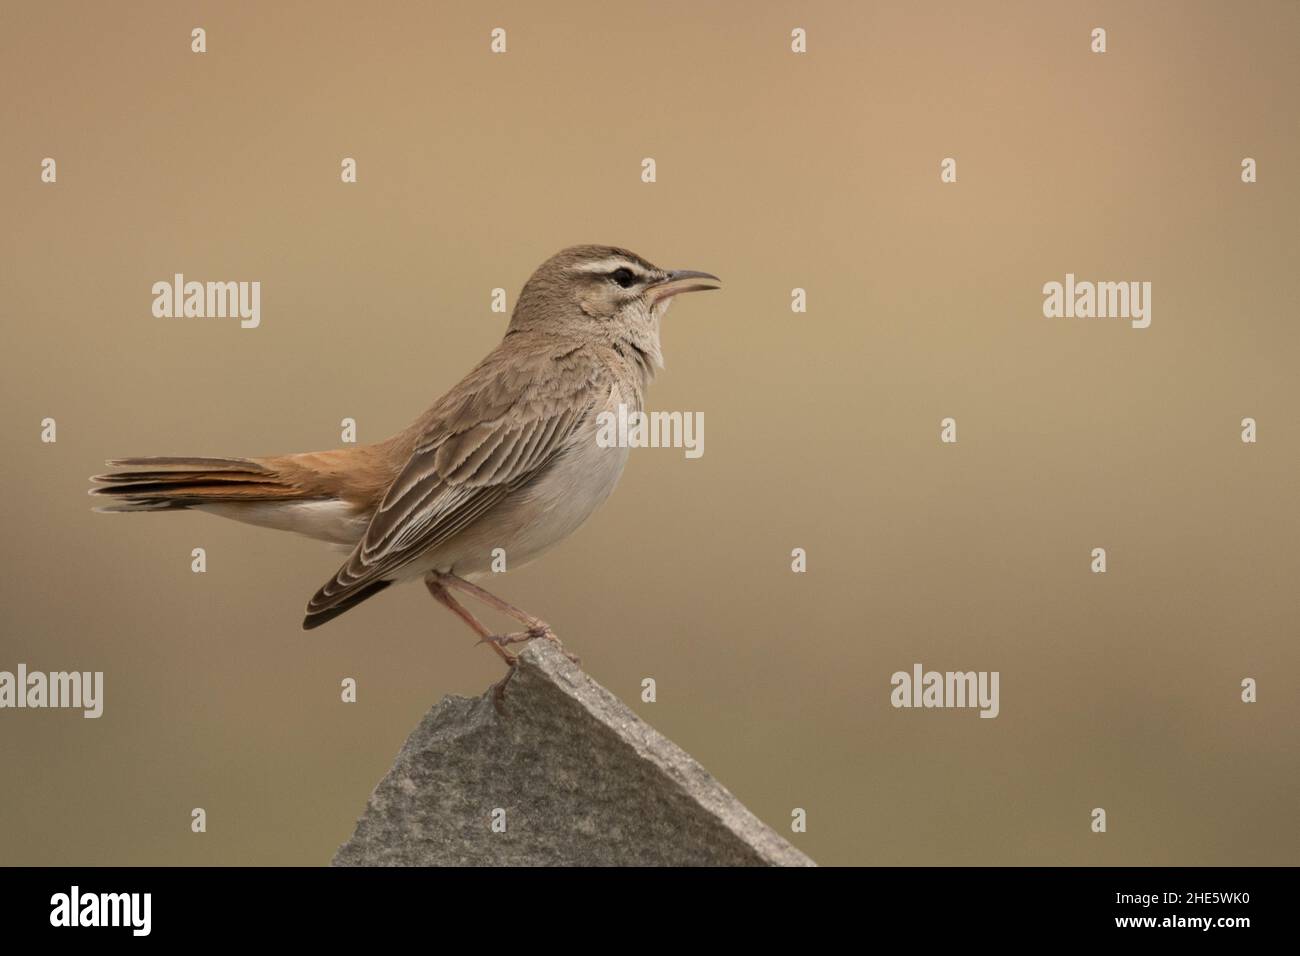 Stunning bird photo. Rufous-tailed scrub robin / Cercotrichas galactotes Stock Photo